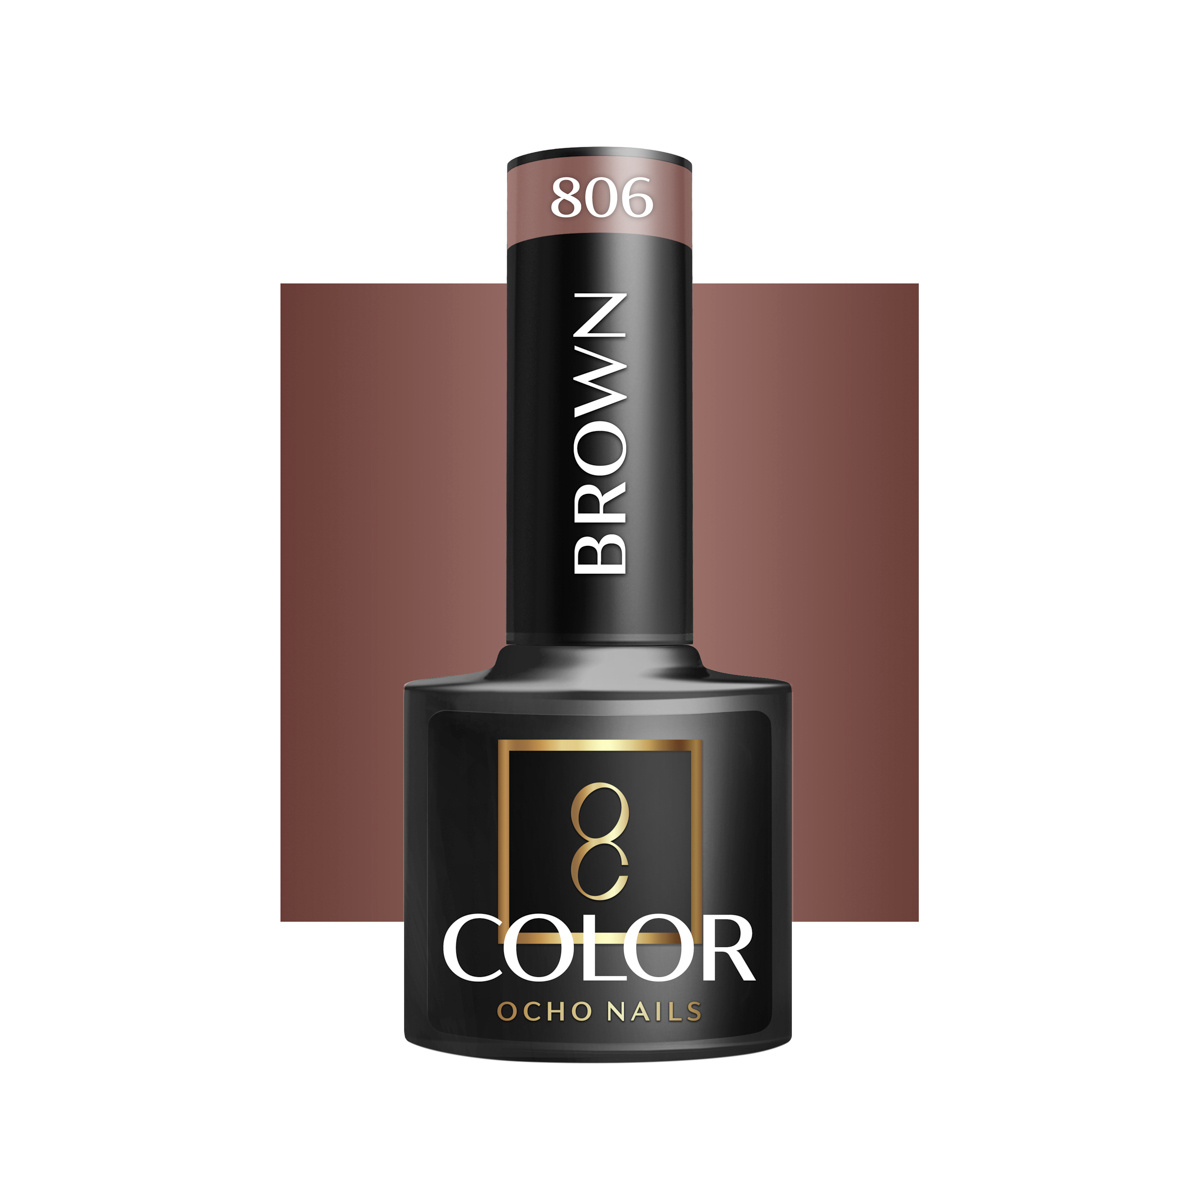 Ocho nails hybrid varnish brown 806 -5 g - Beauty Direct